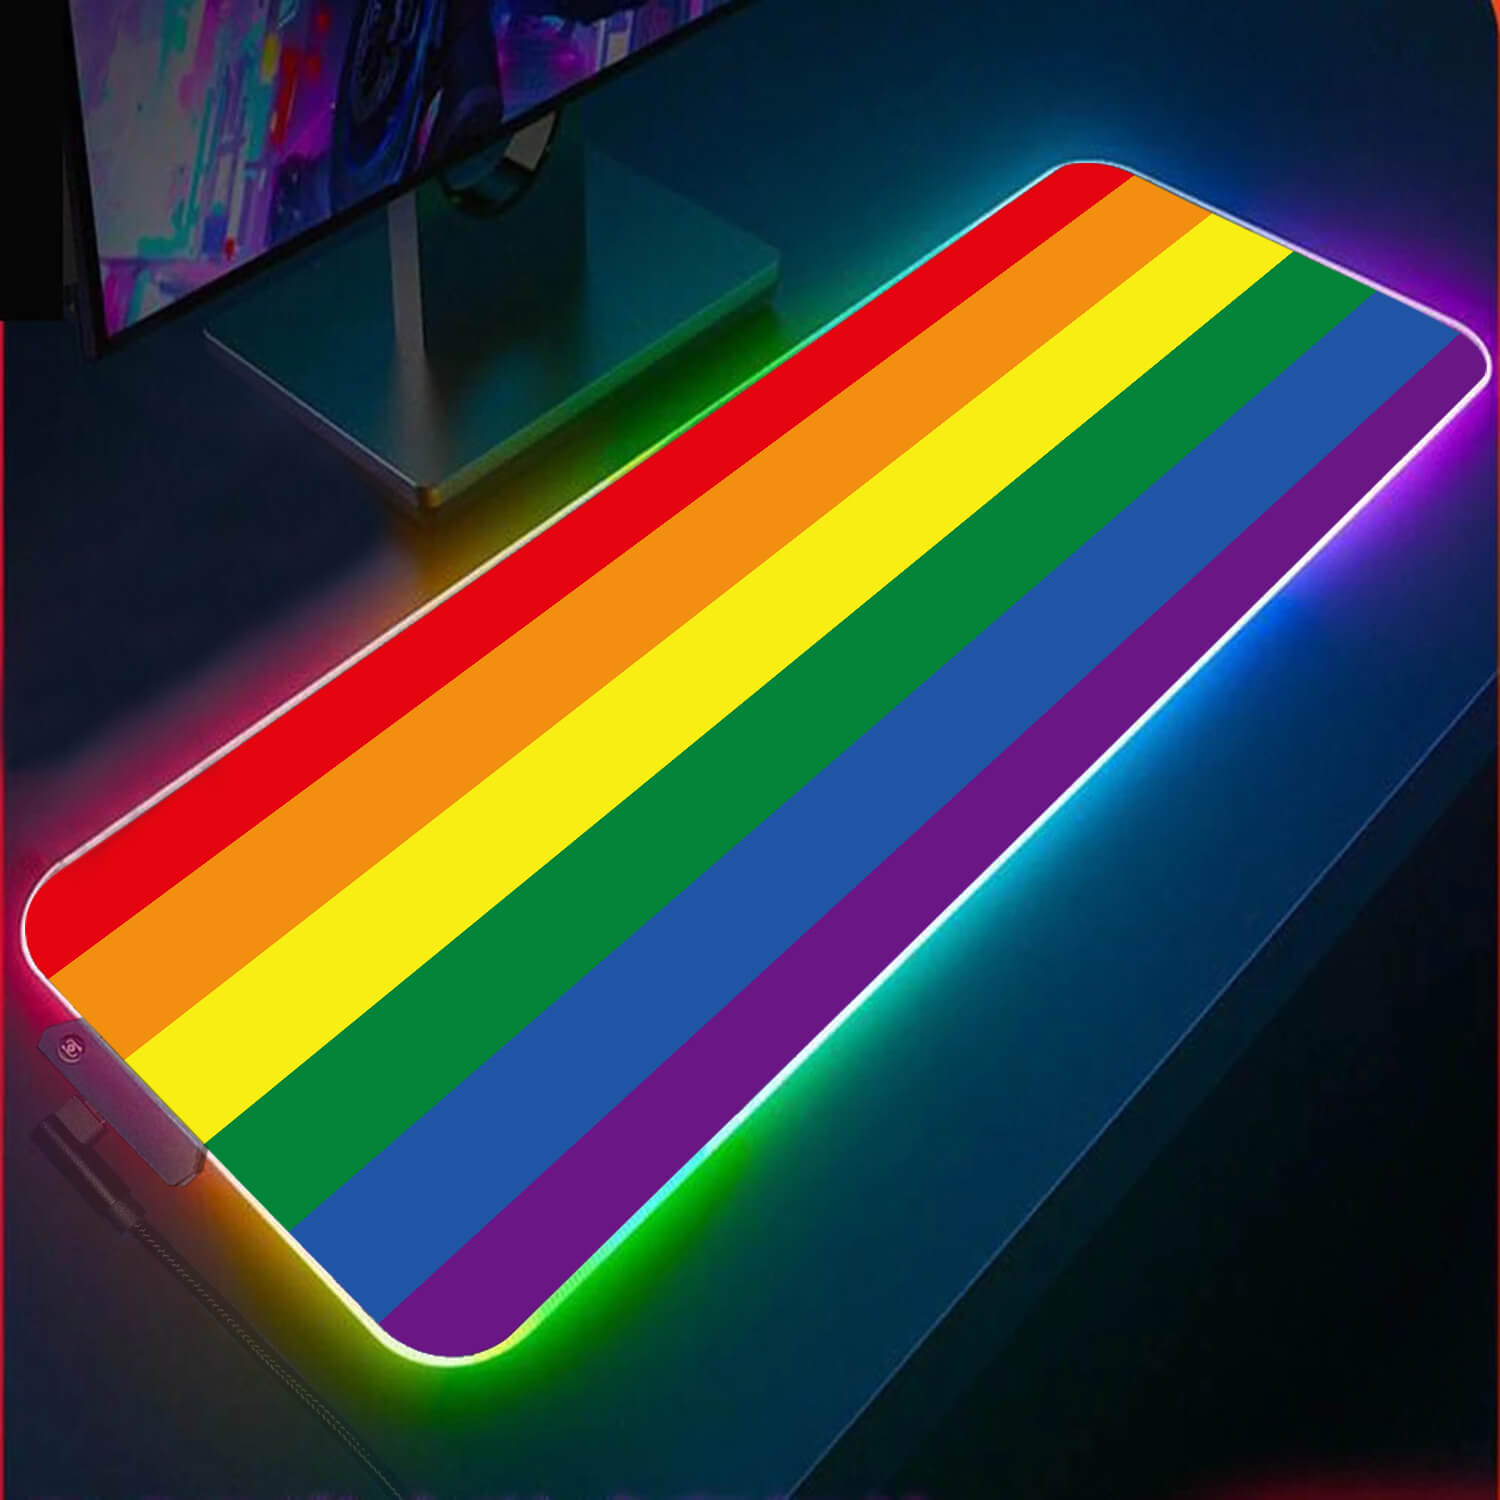 LGBT Pride RGB Gaming Mouse Pad(2 patterns)